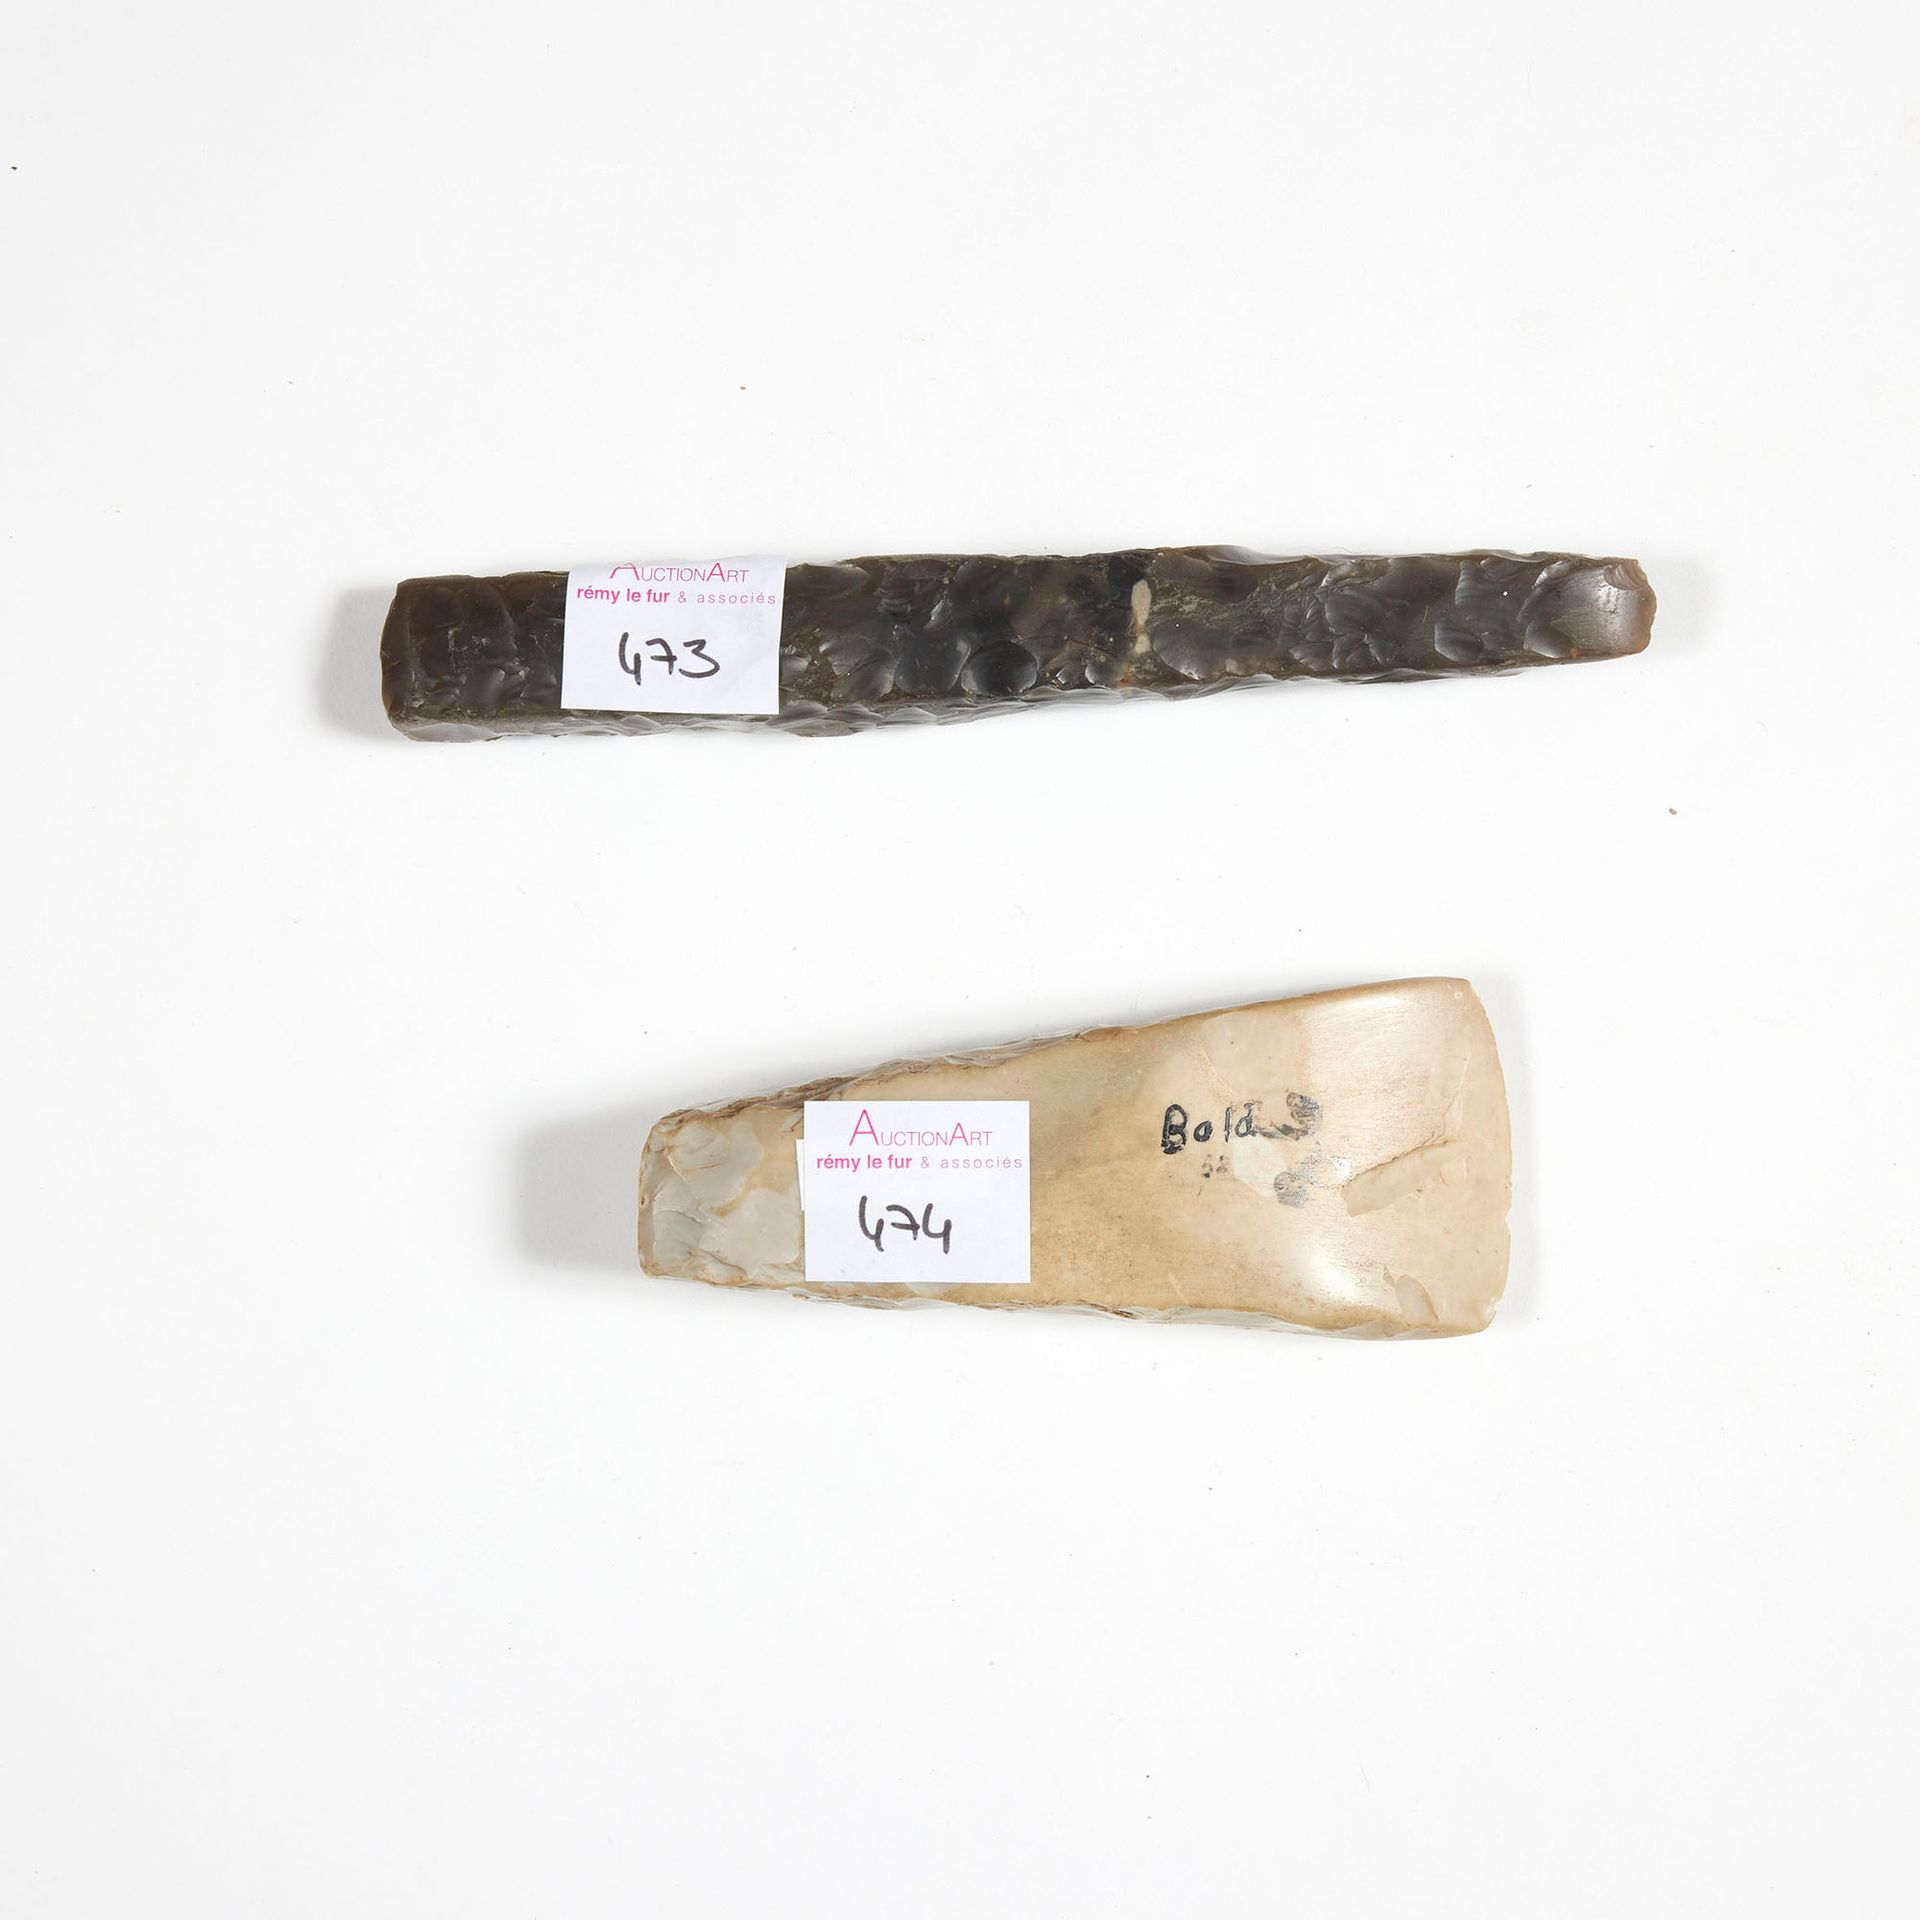 Ciseau 凿子

具有四角形断面，灰黑色的燧石。

丹麦 Chalcolithic

白墨题写的 "32 15"。

长度：17厘米